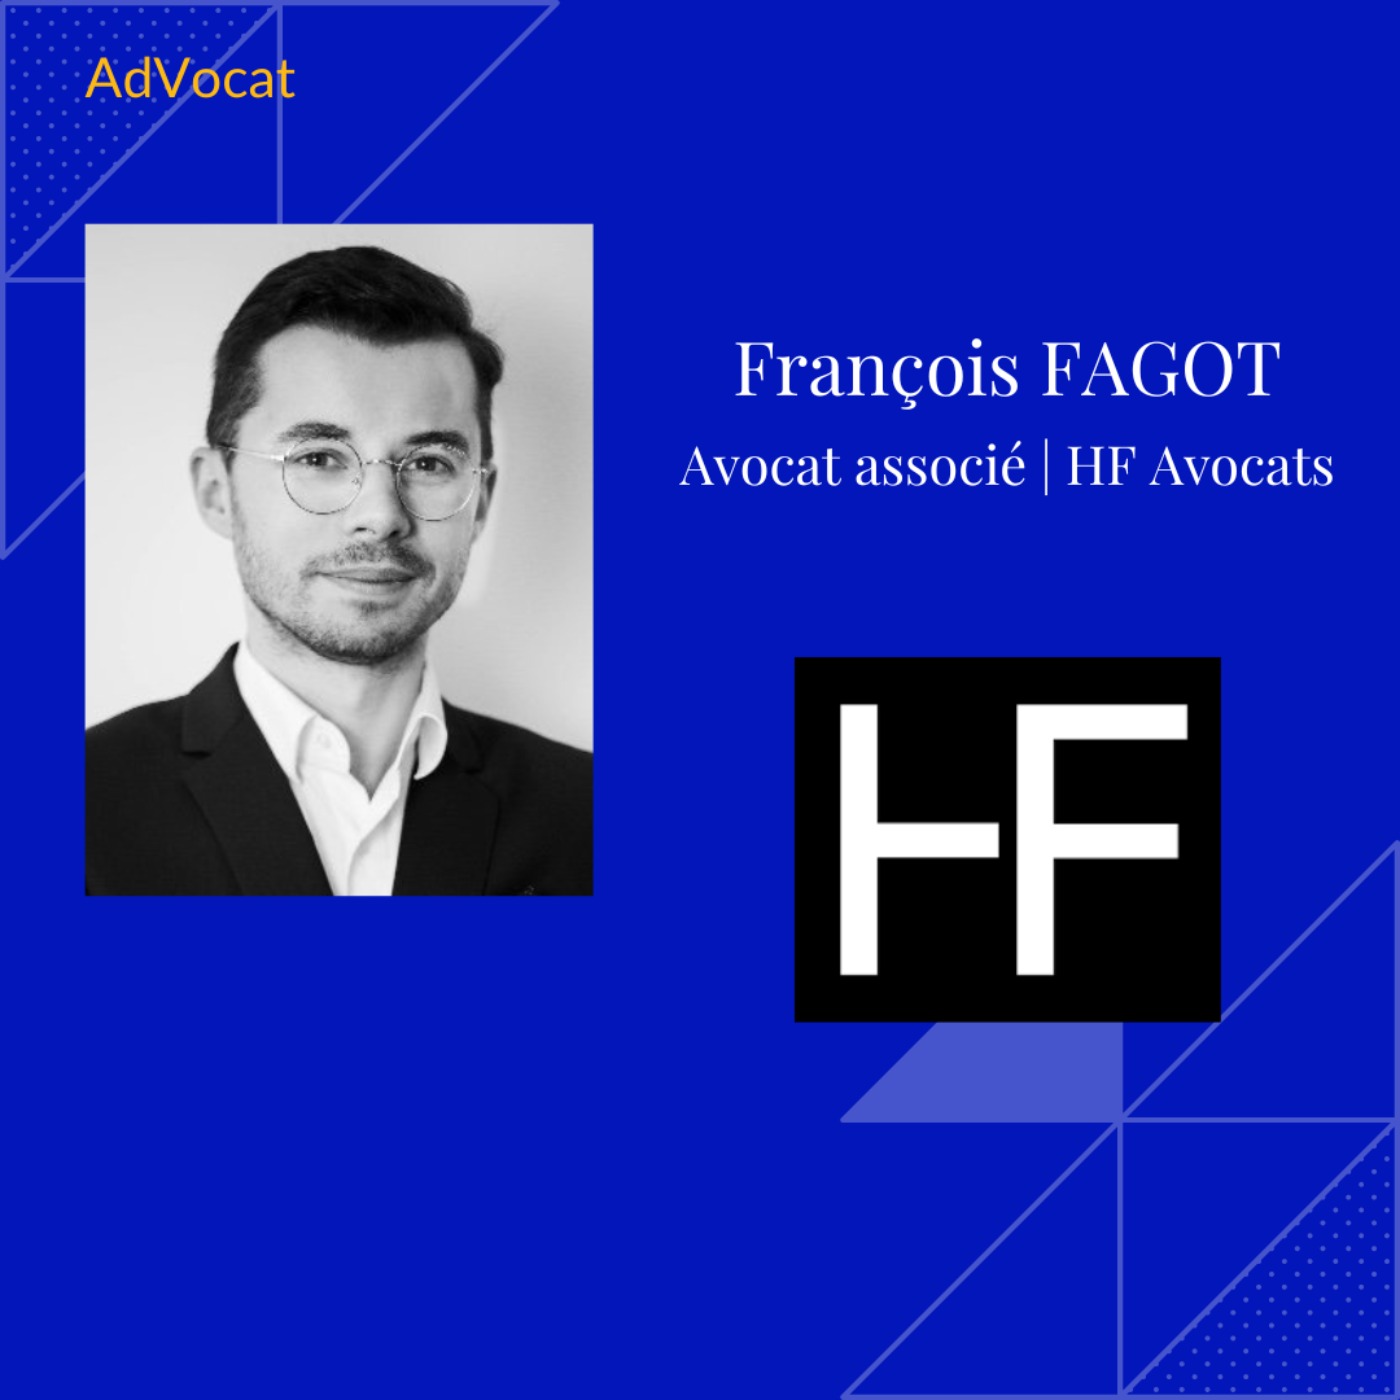 François Fagot - Avocat associé , HF avocats